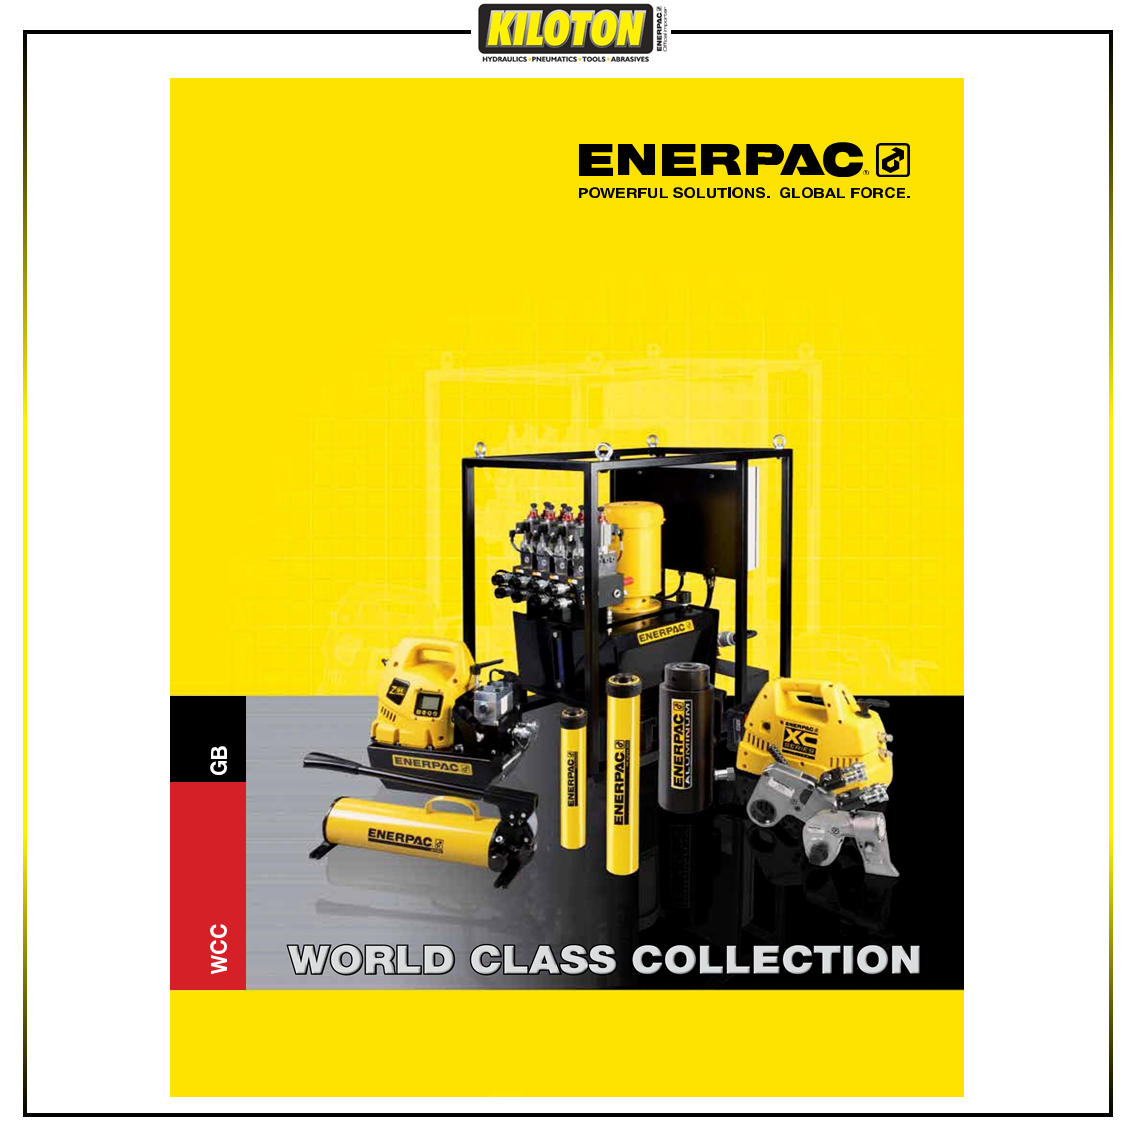 KILATON - Enerpac WC Collection Catalogue